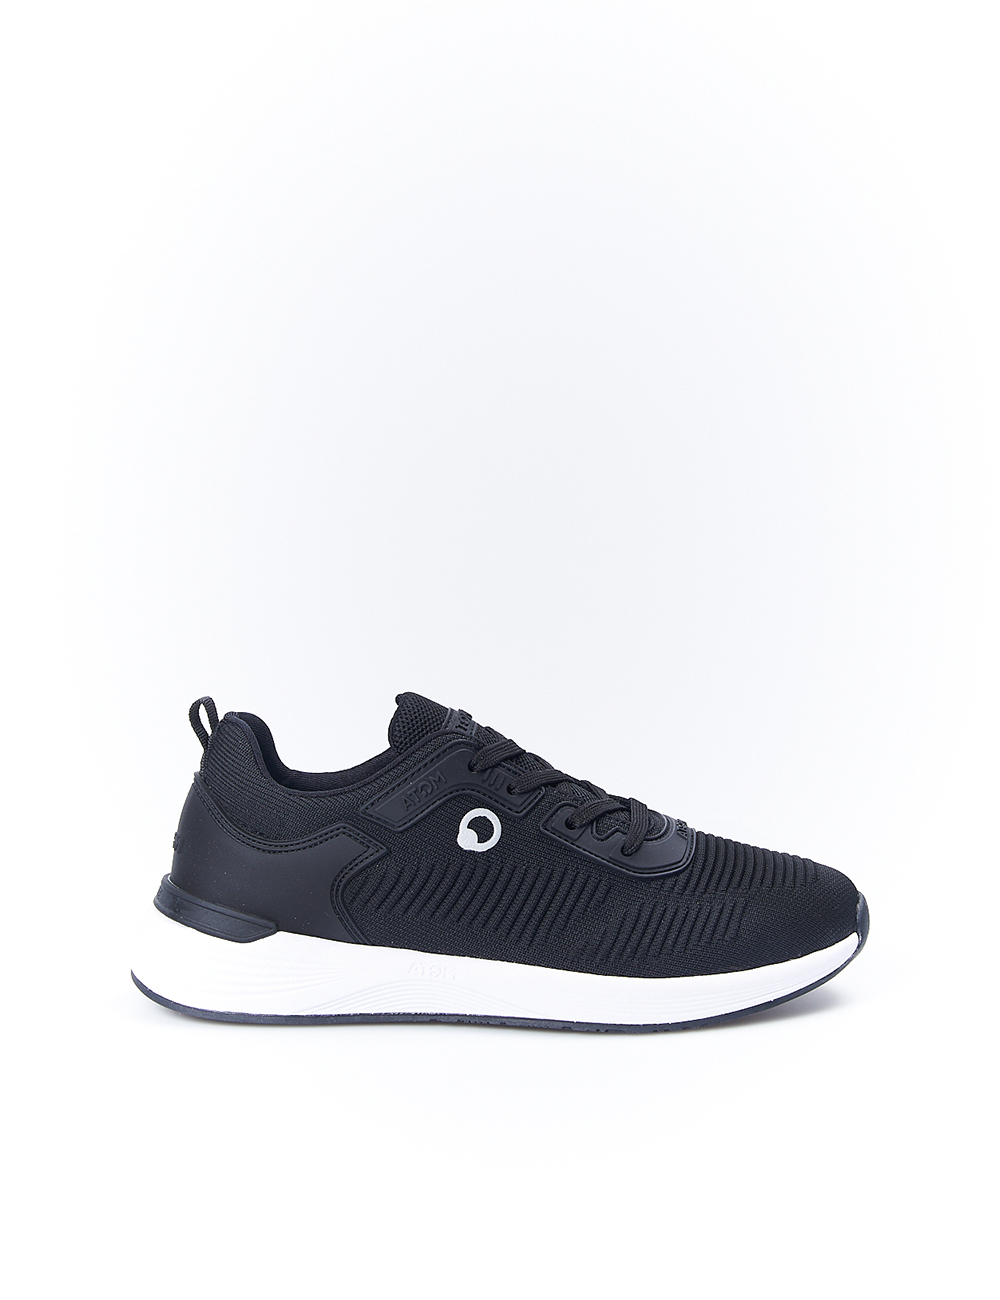 Zapatos Deportivos Atom By Fluchos At107 - Negro - Sneakers Para Mujer  MKP